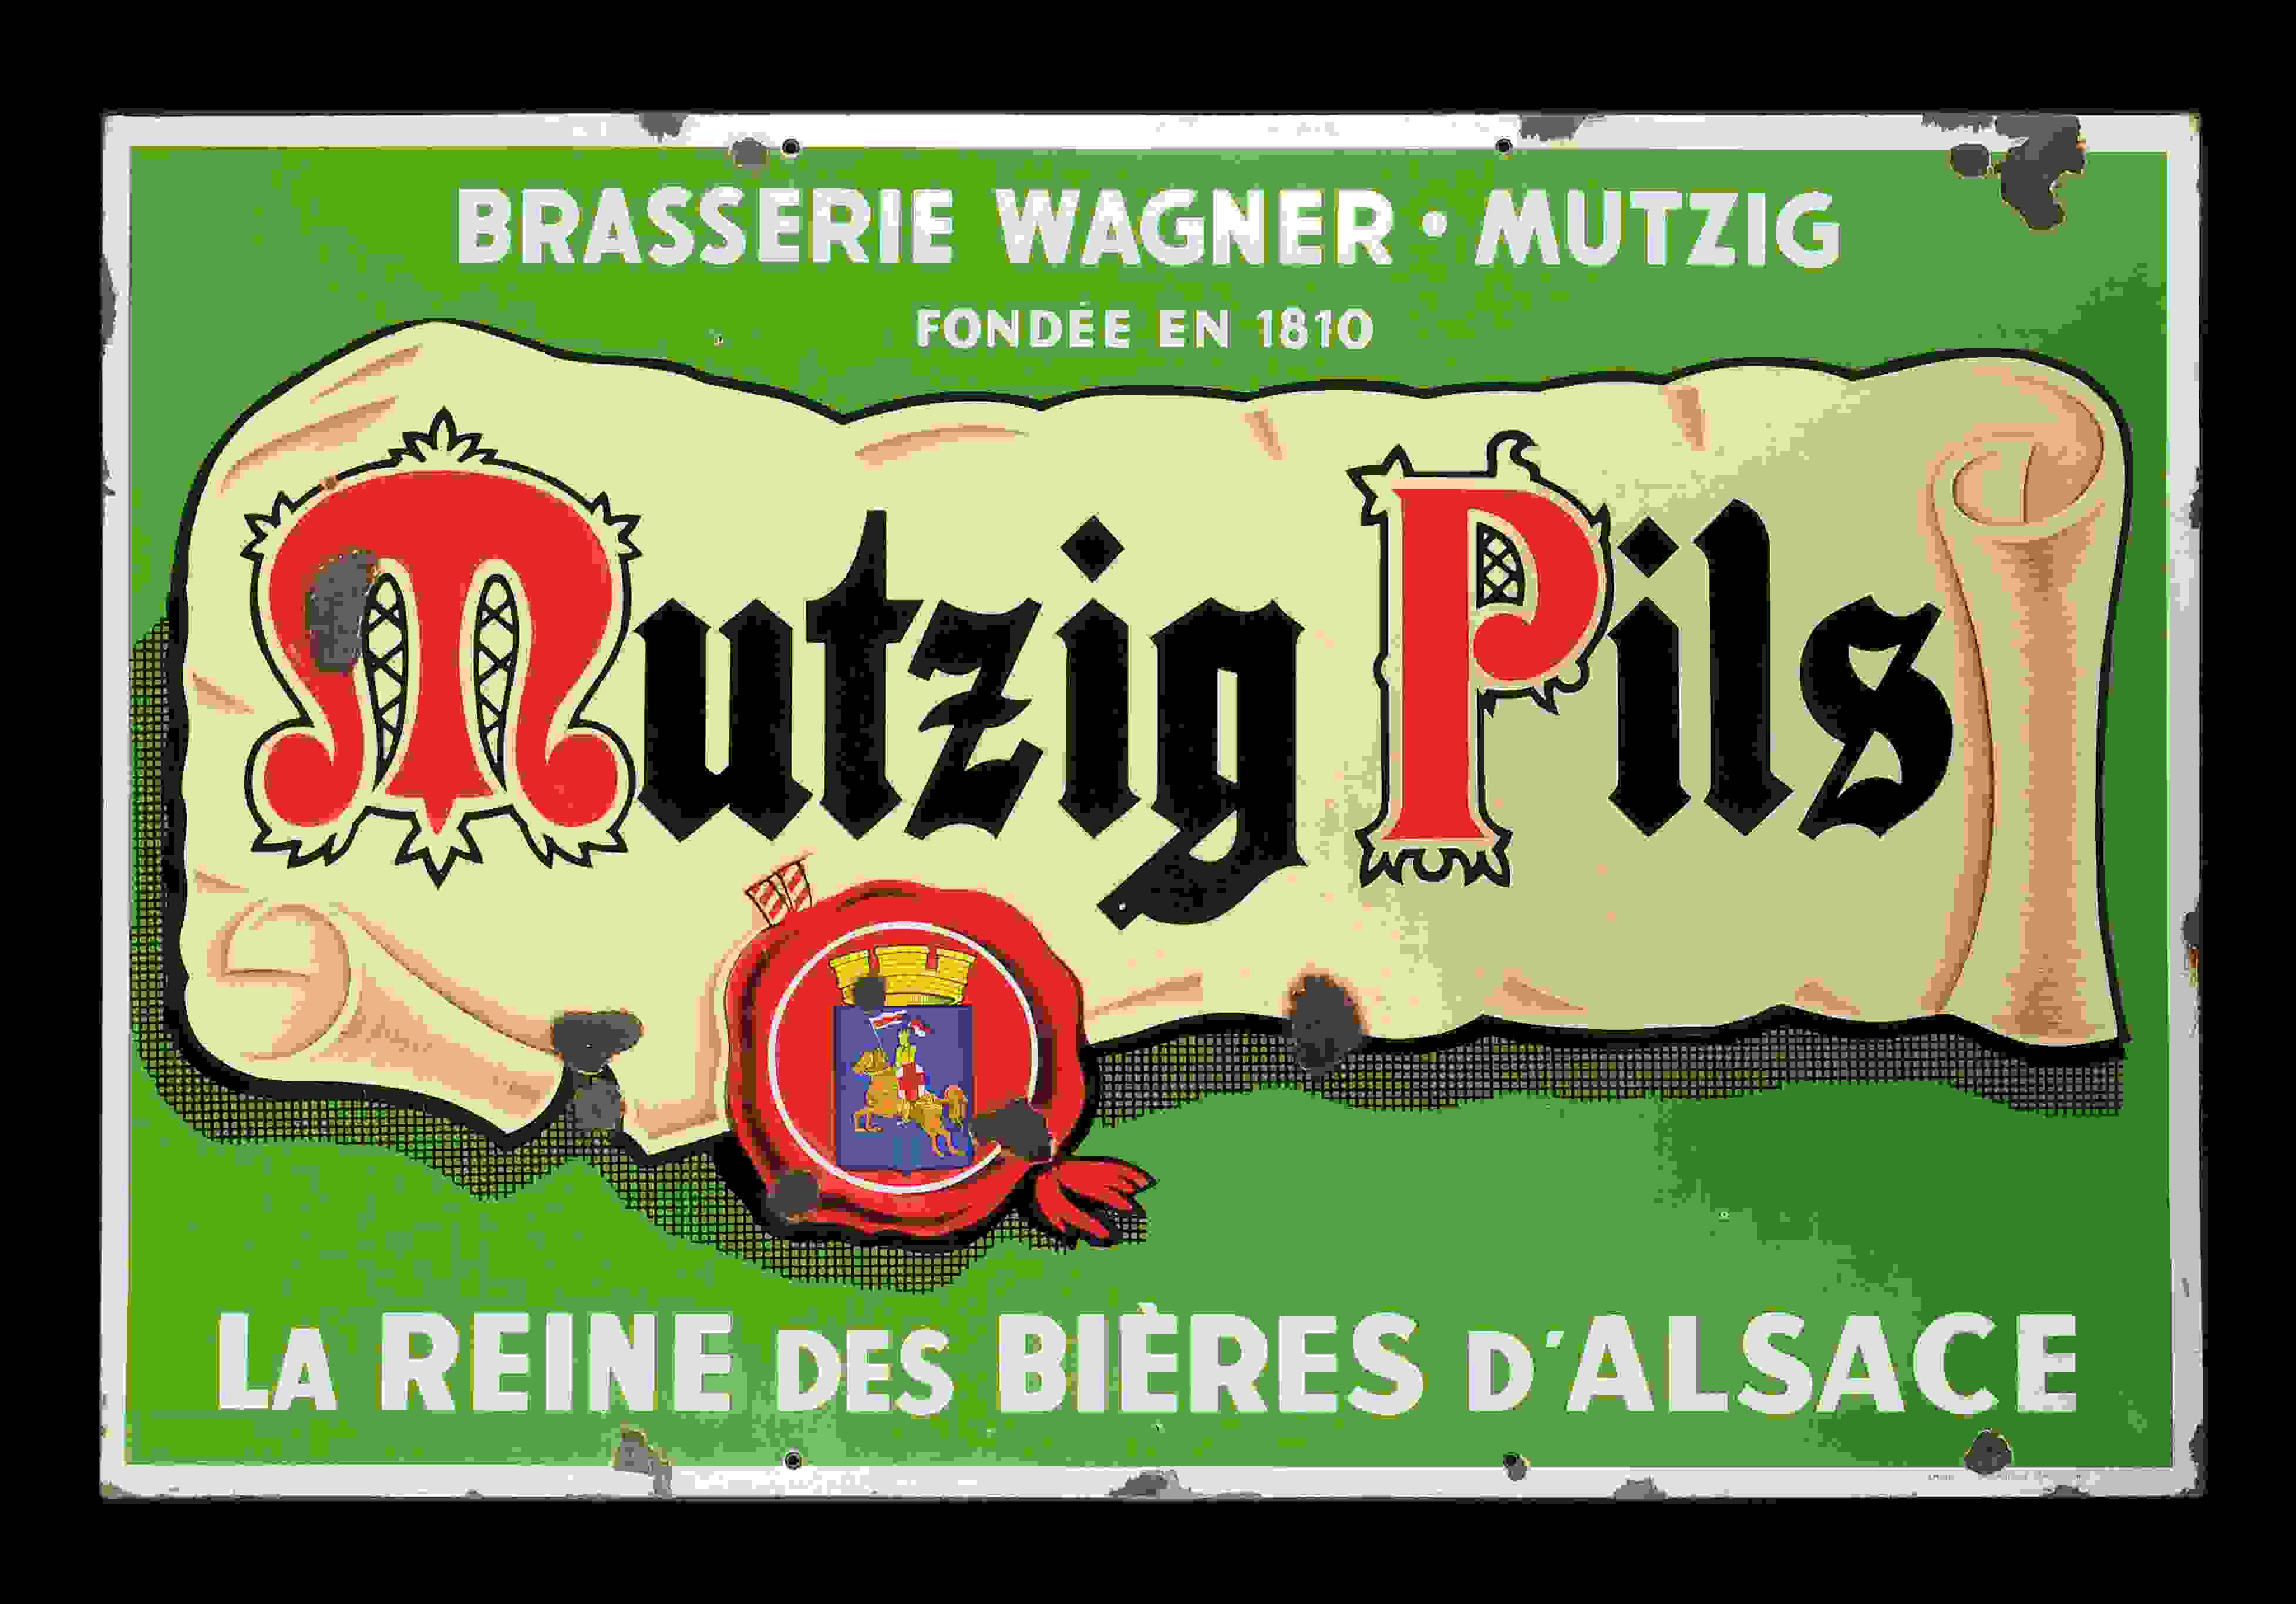 Mutzig Pils Brasserie Wagner 